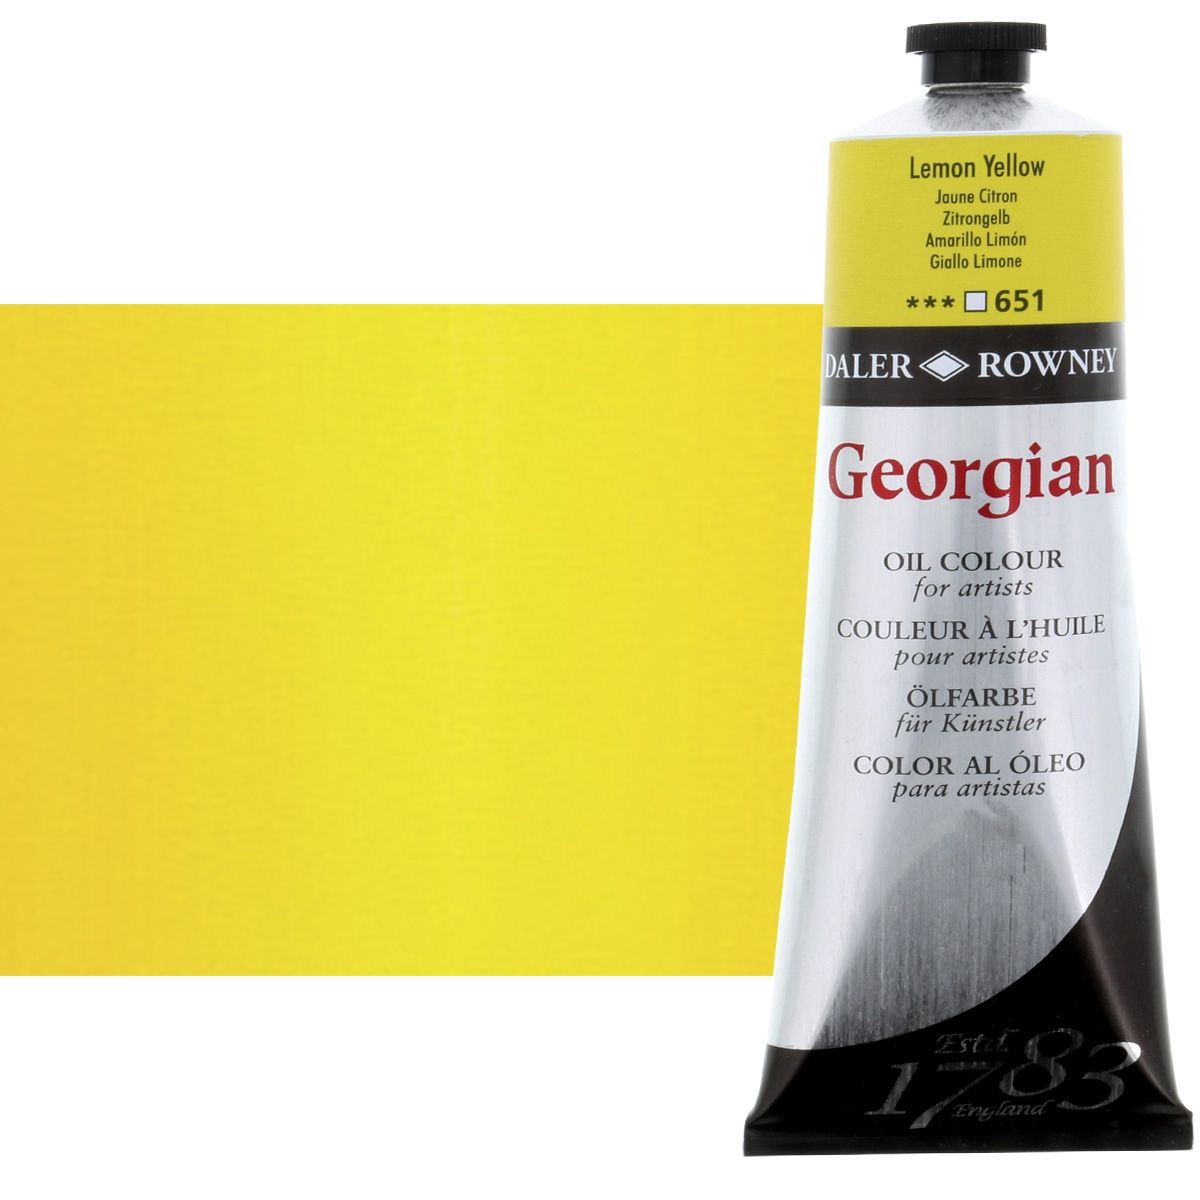 Daler-Rowney Georgian Oil Color 225ml Tube - Lemon Yellow